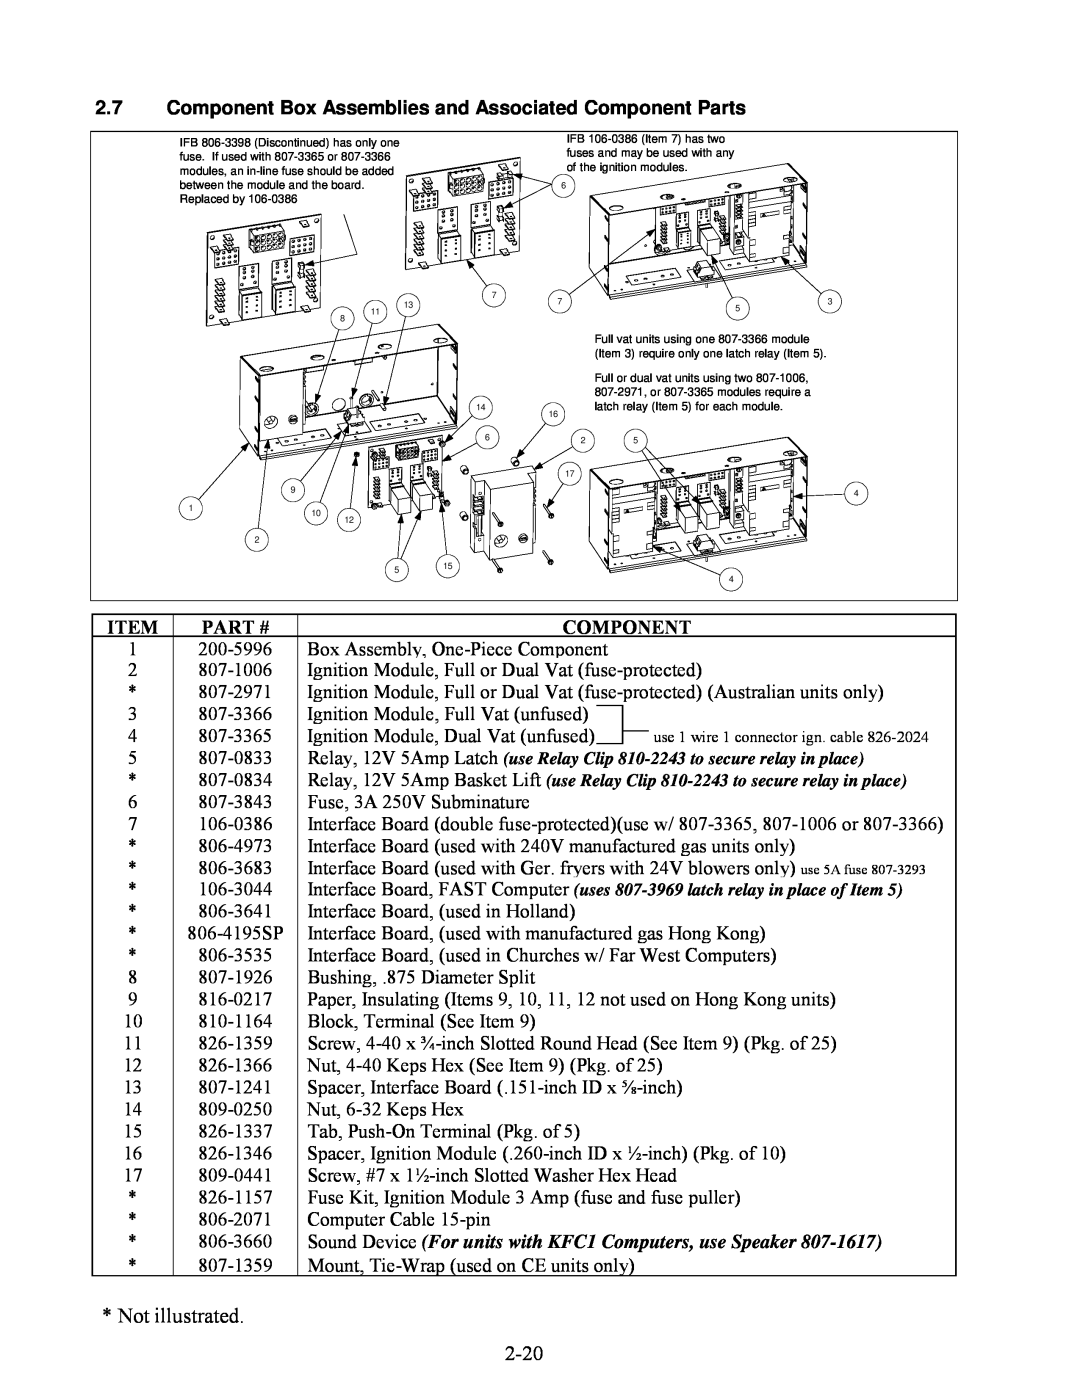 Frymaster H50 Series manual Not illustrated 2-20, Item Part # 